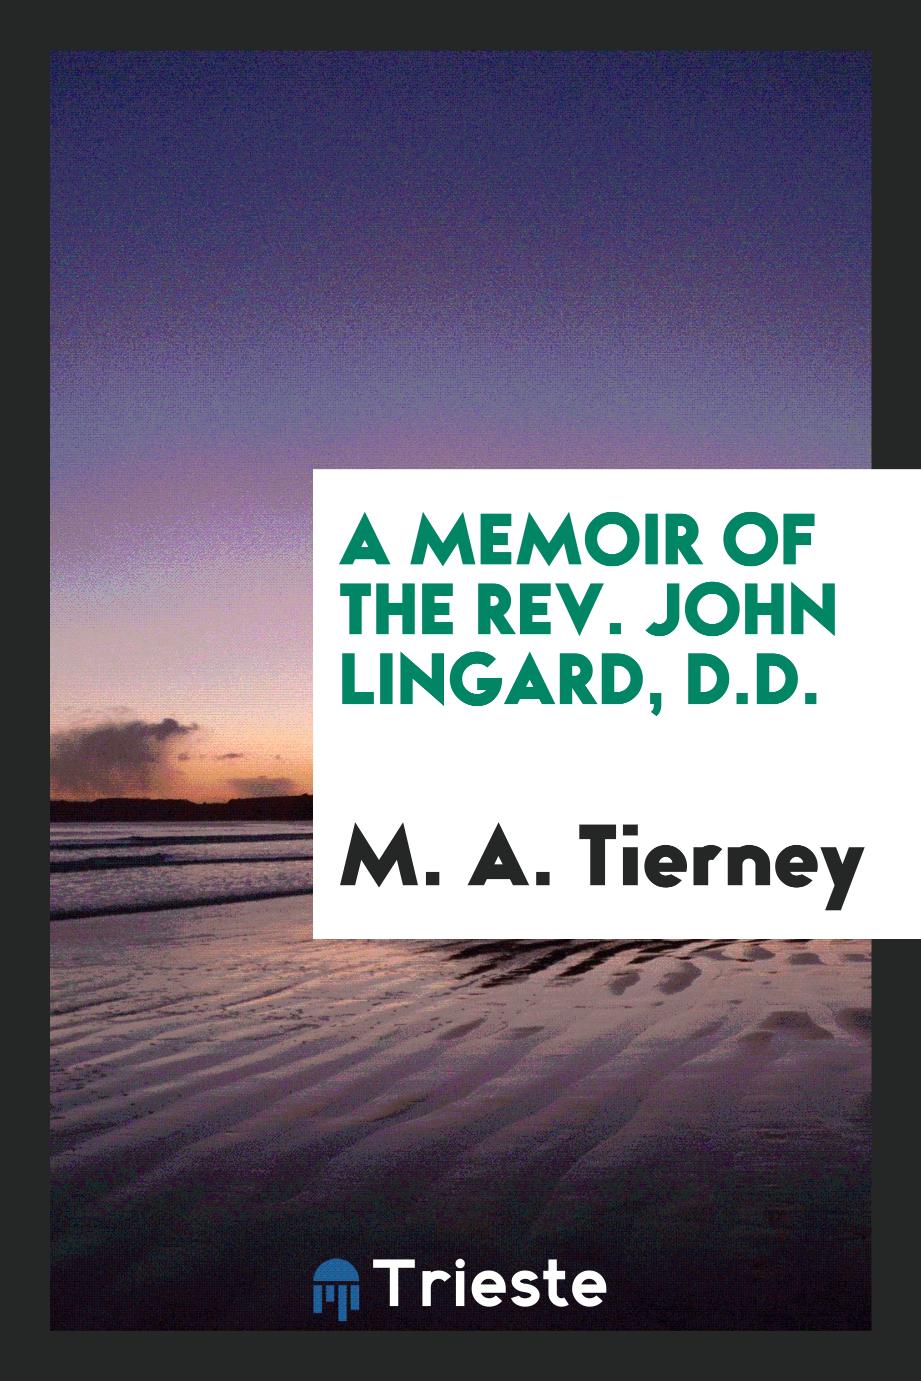 A memoir of the Rev. John Lingard, D.D.